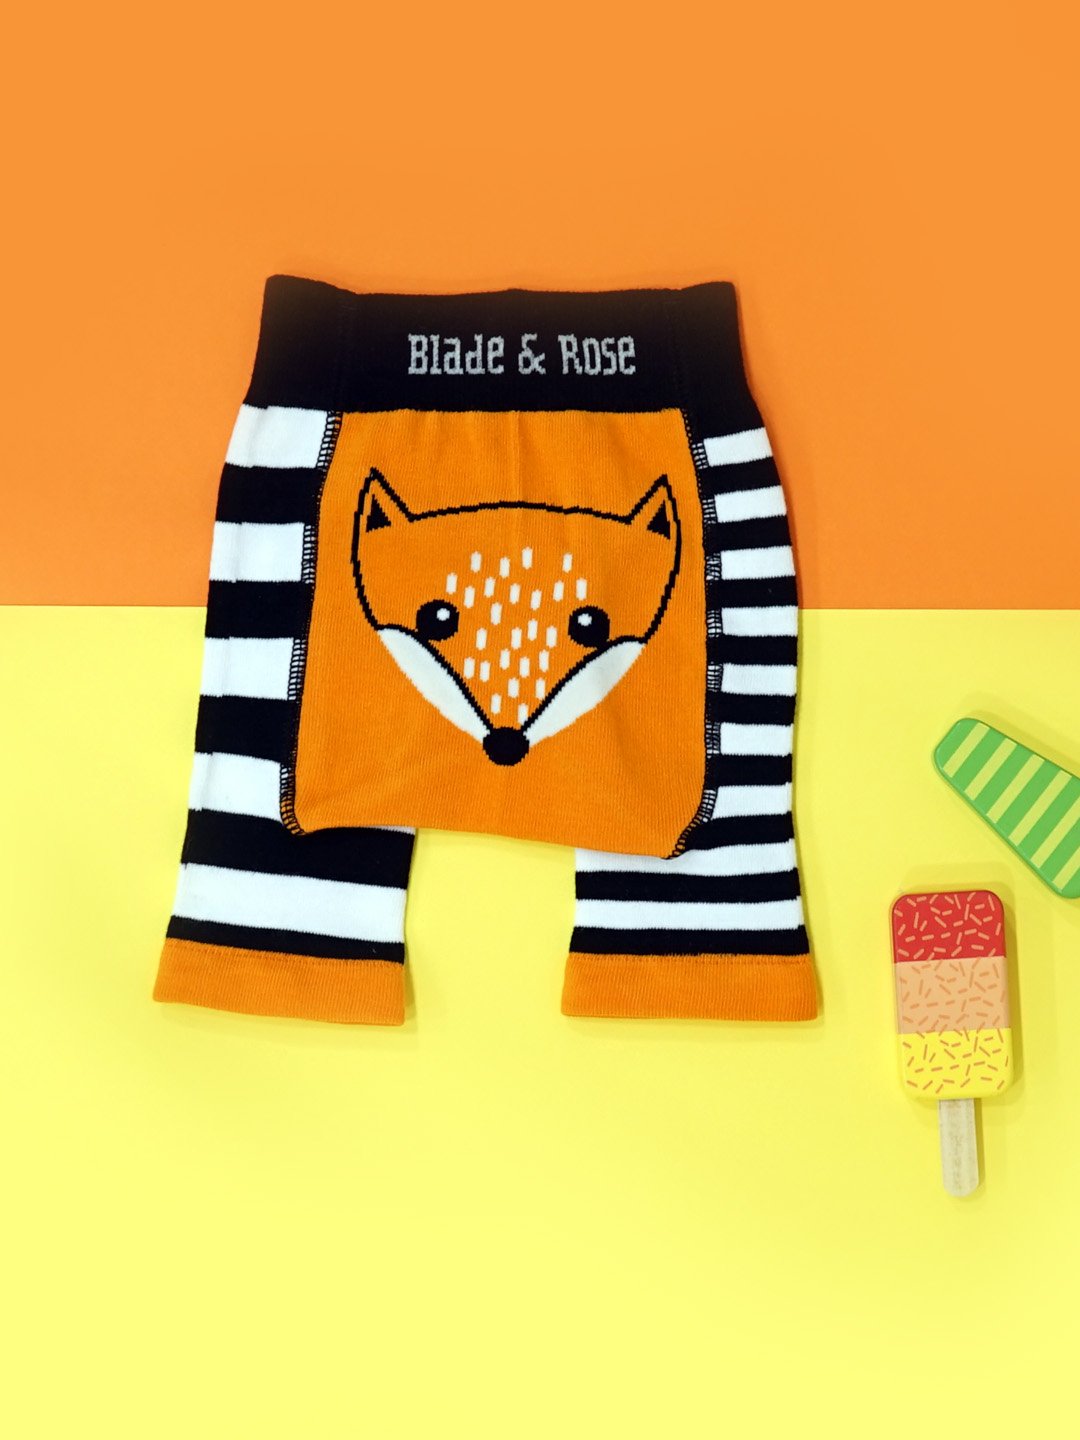 Blade & Rose - Fox Shorts|Summer Sweets Baby